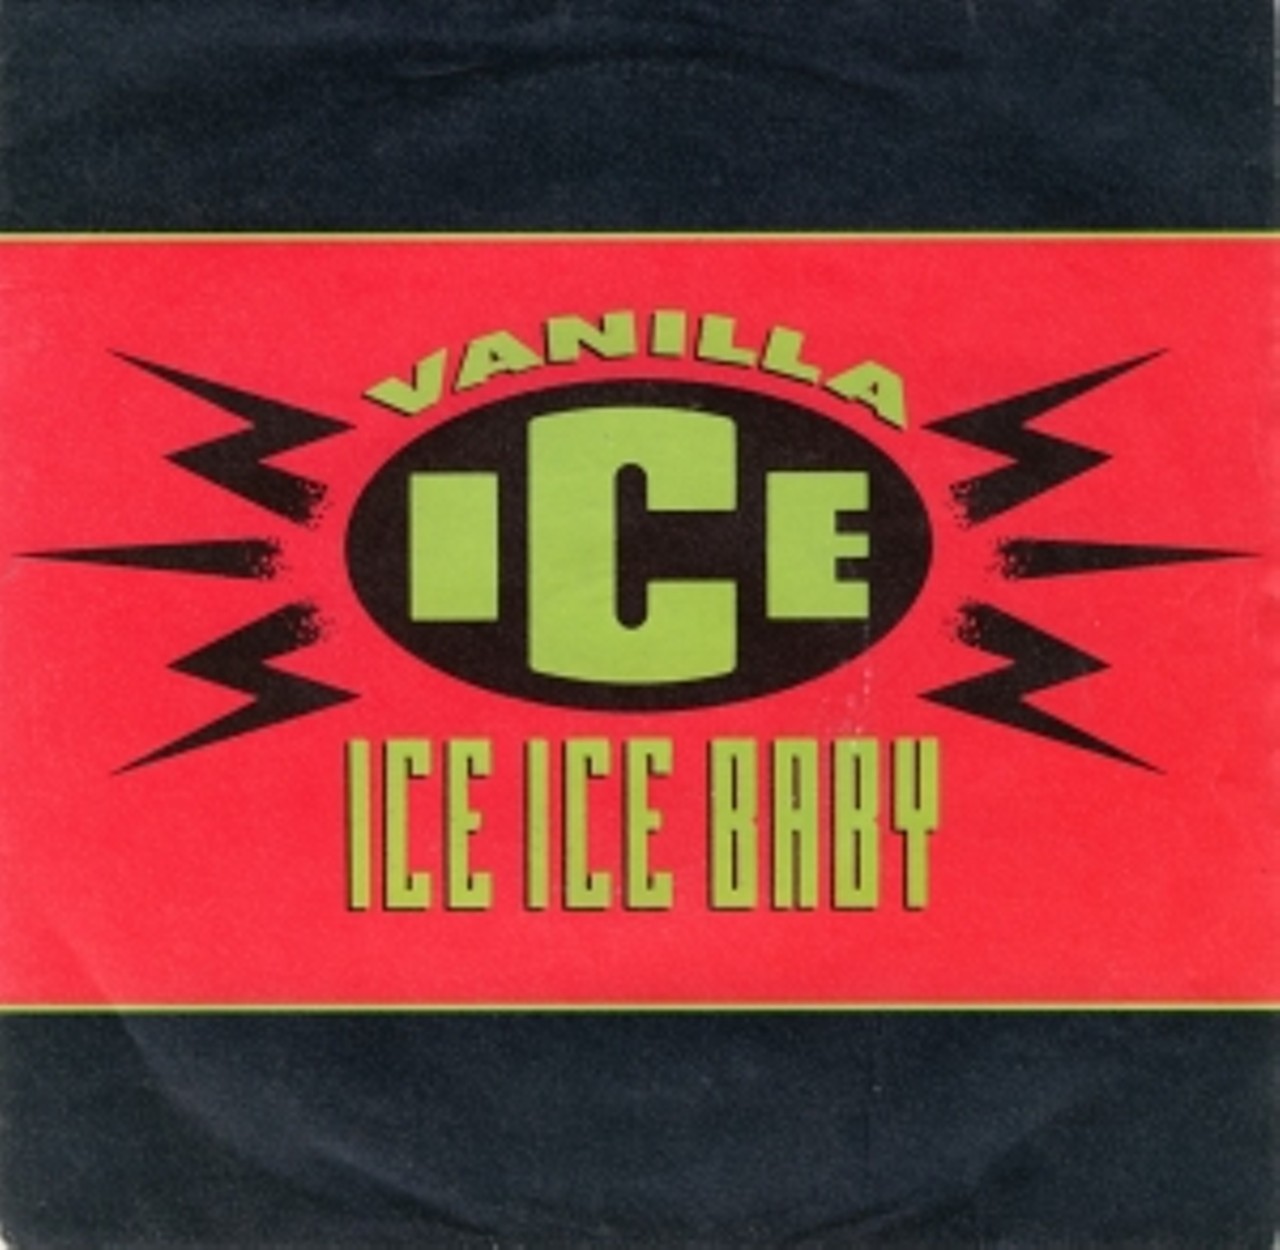 The "Ice, Ice Baby" single.